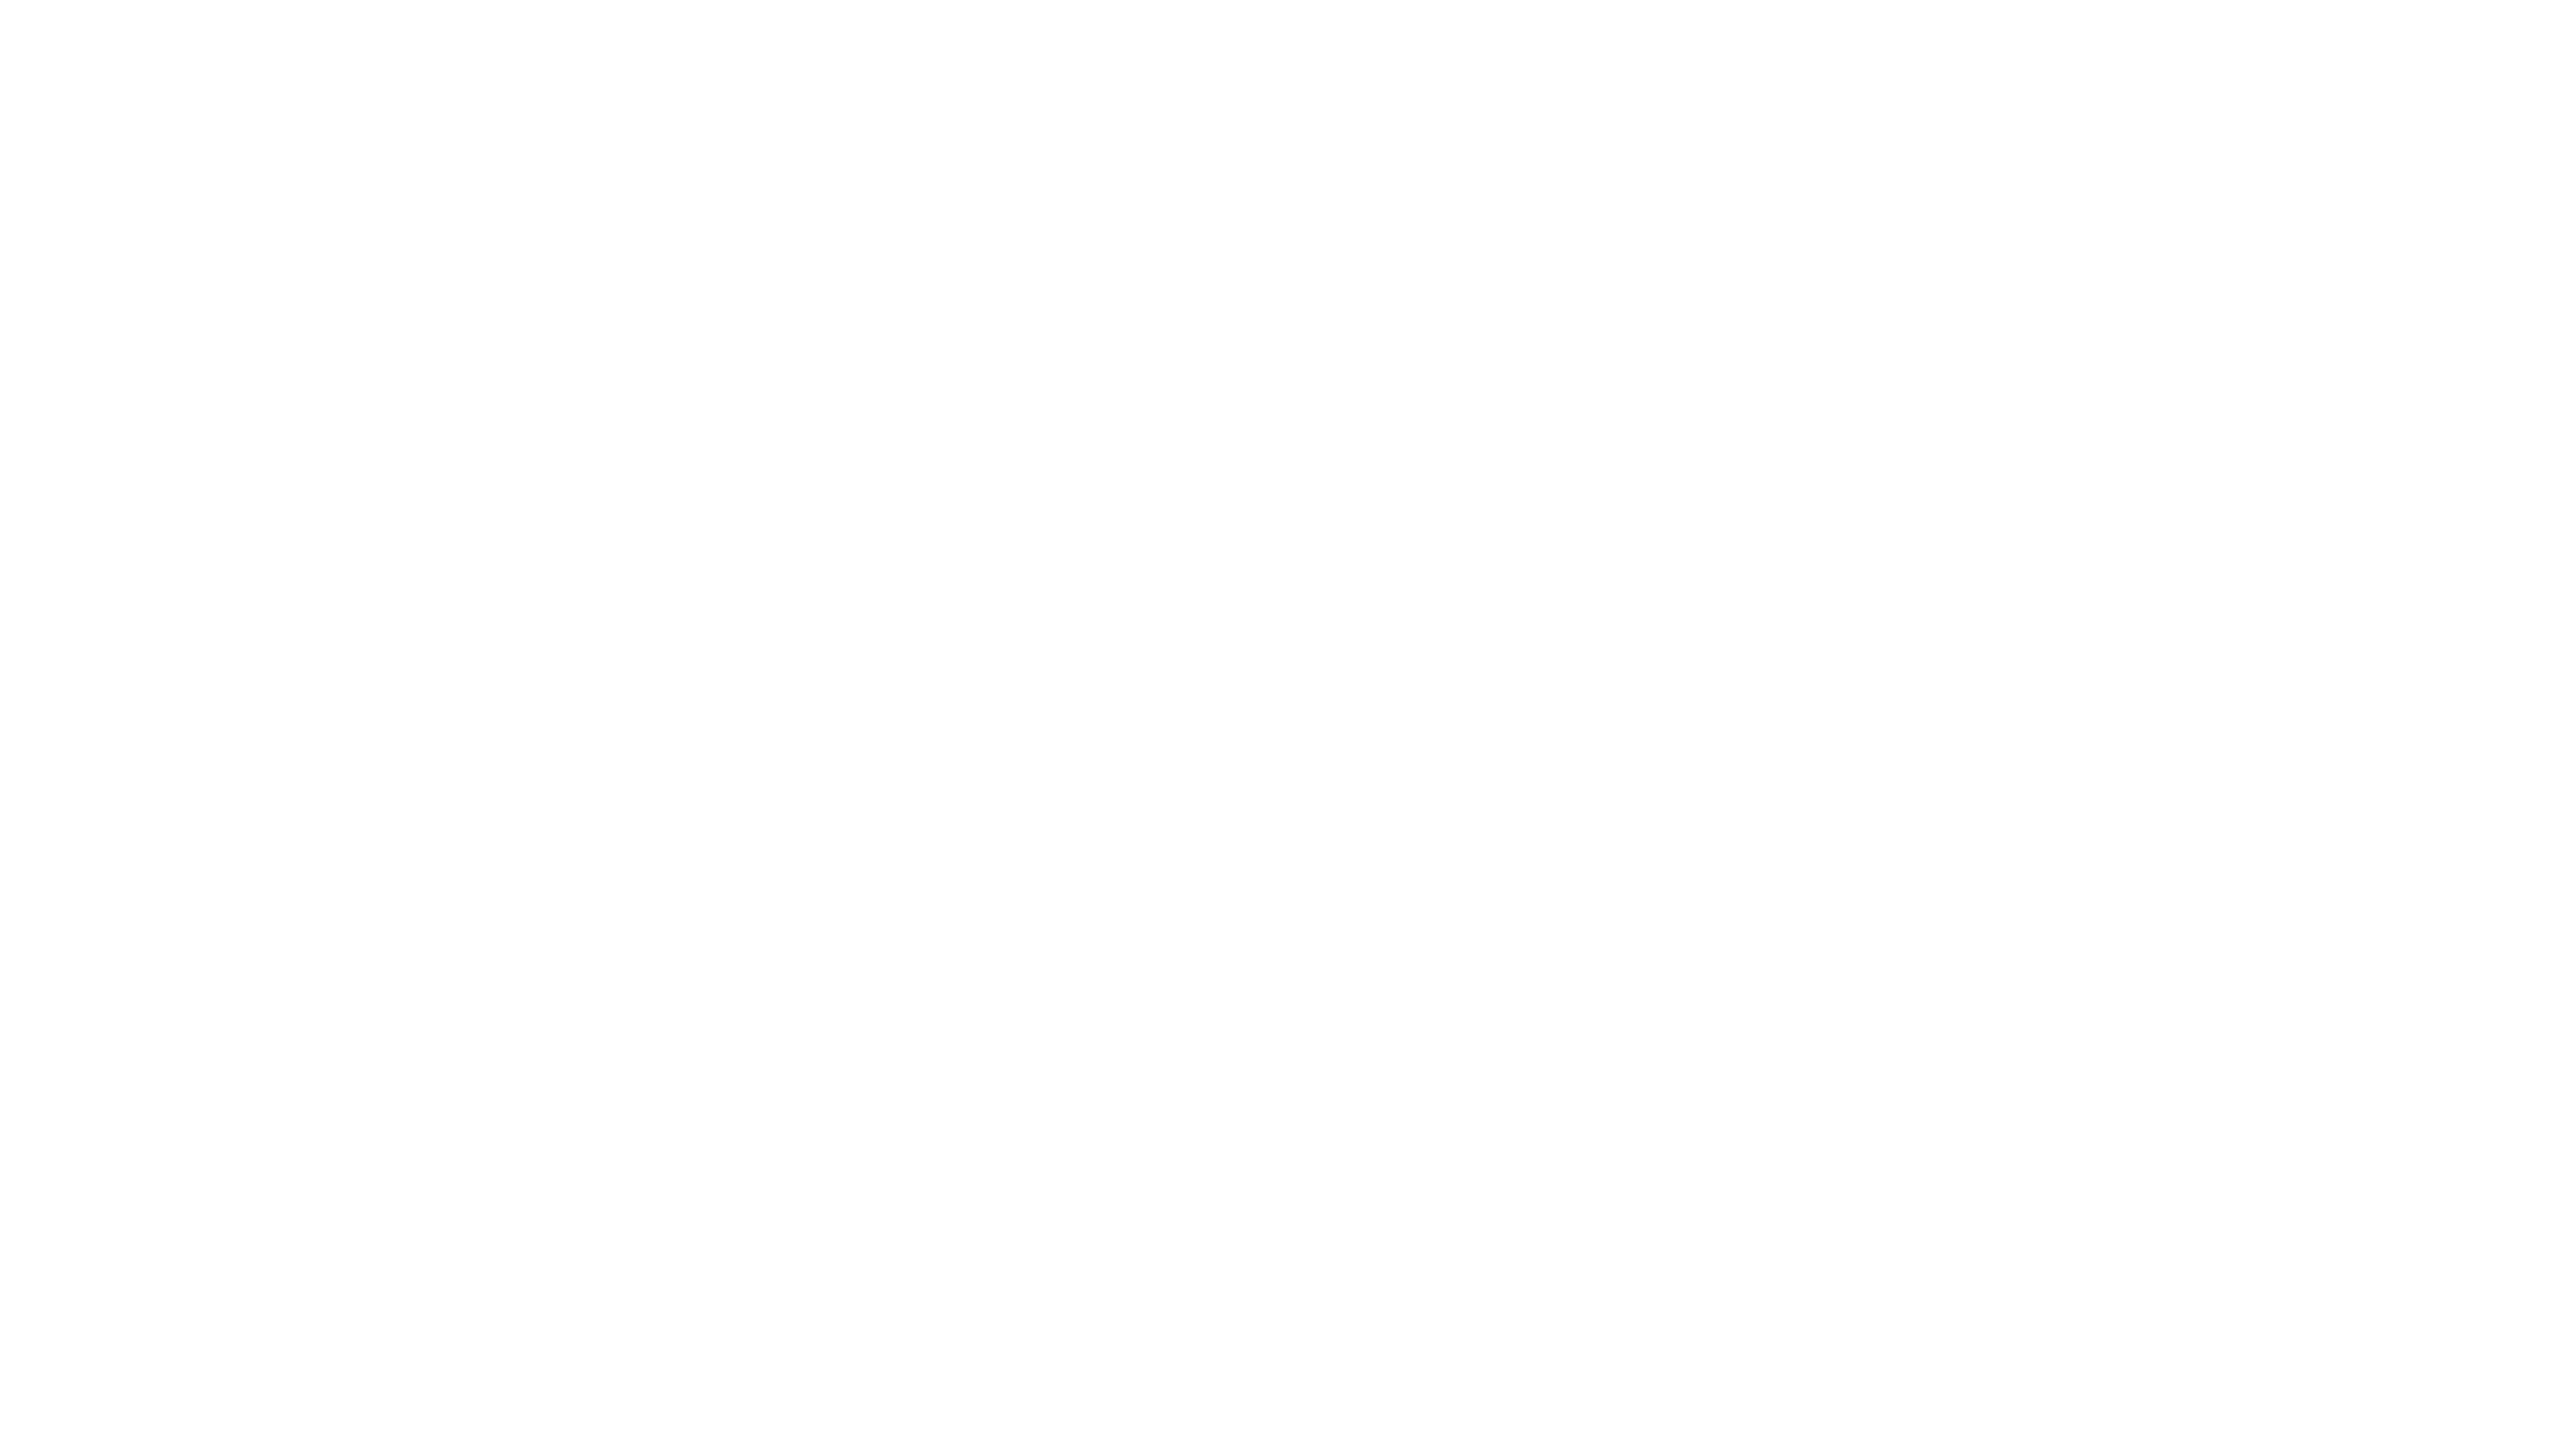 Coca-Cola-Logo-1987-2009